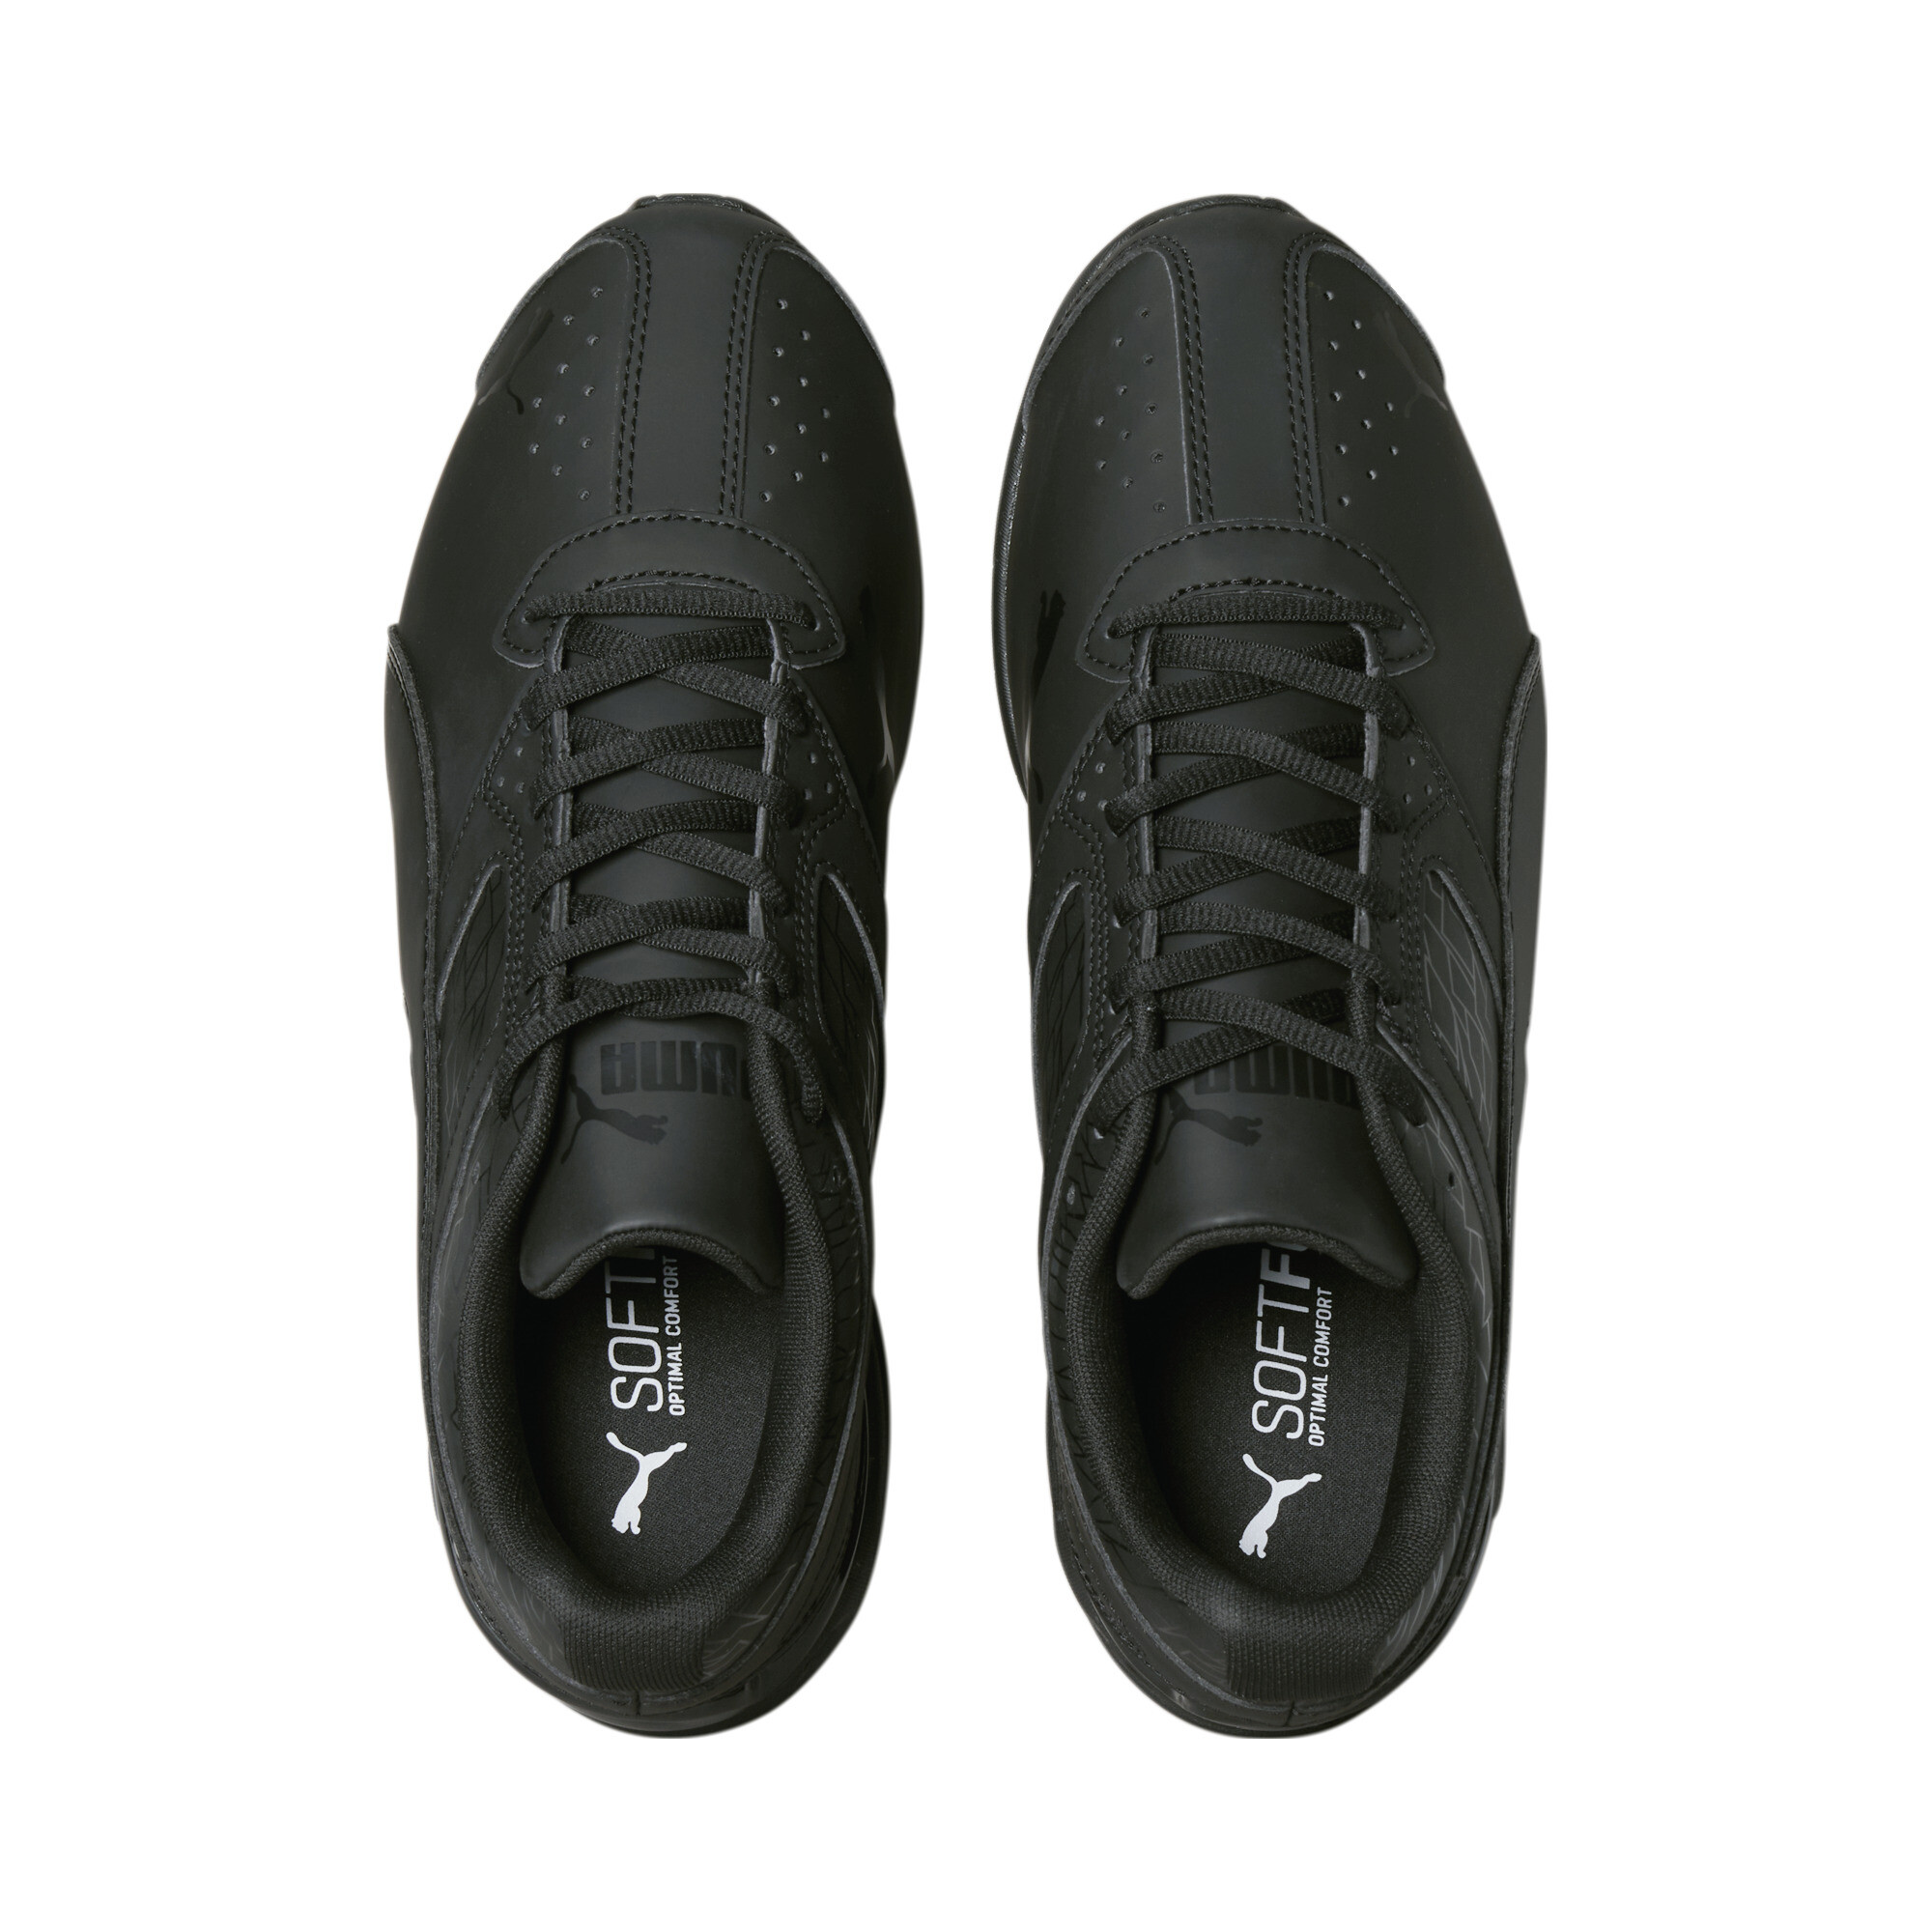 PUMA Men's Tazon 6 Fracture FM Sneakers | eBay